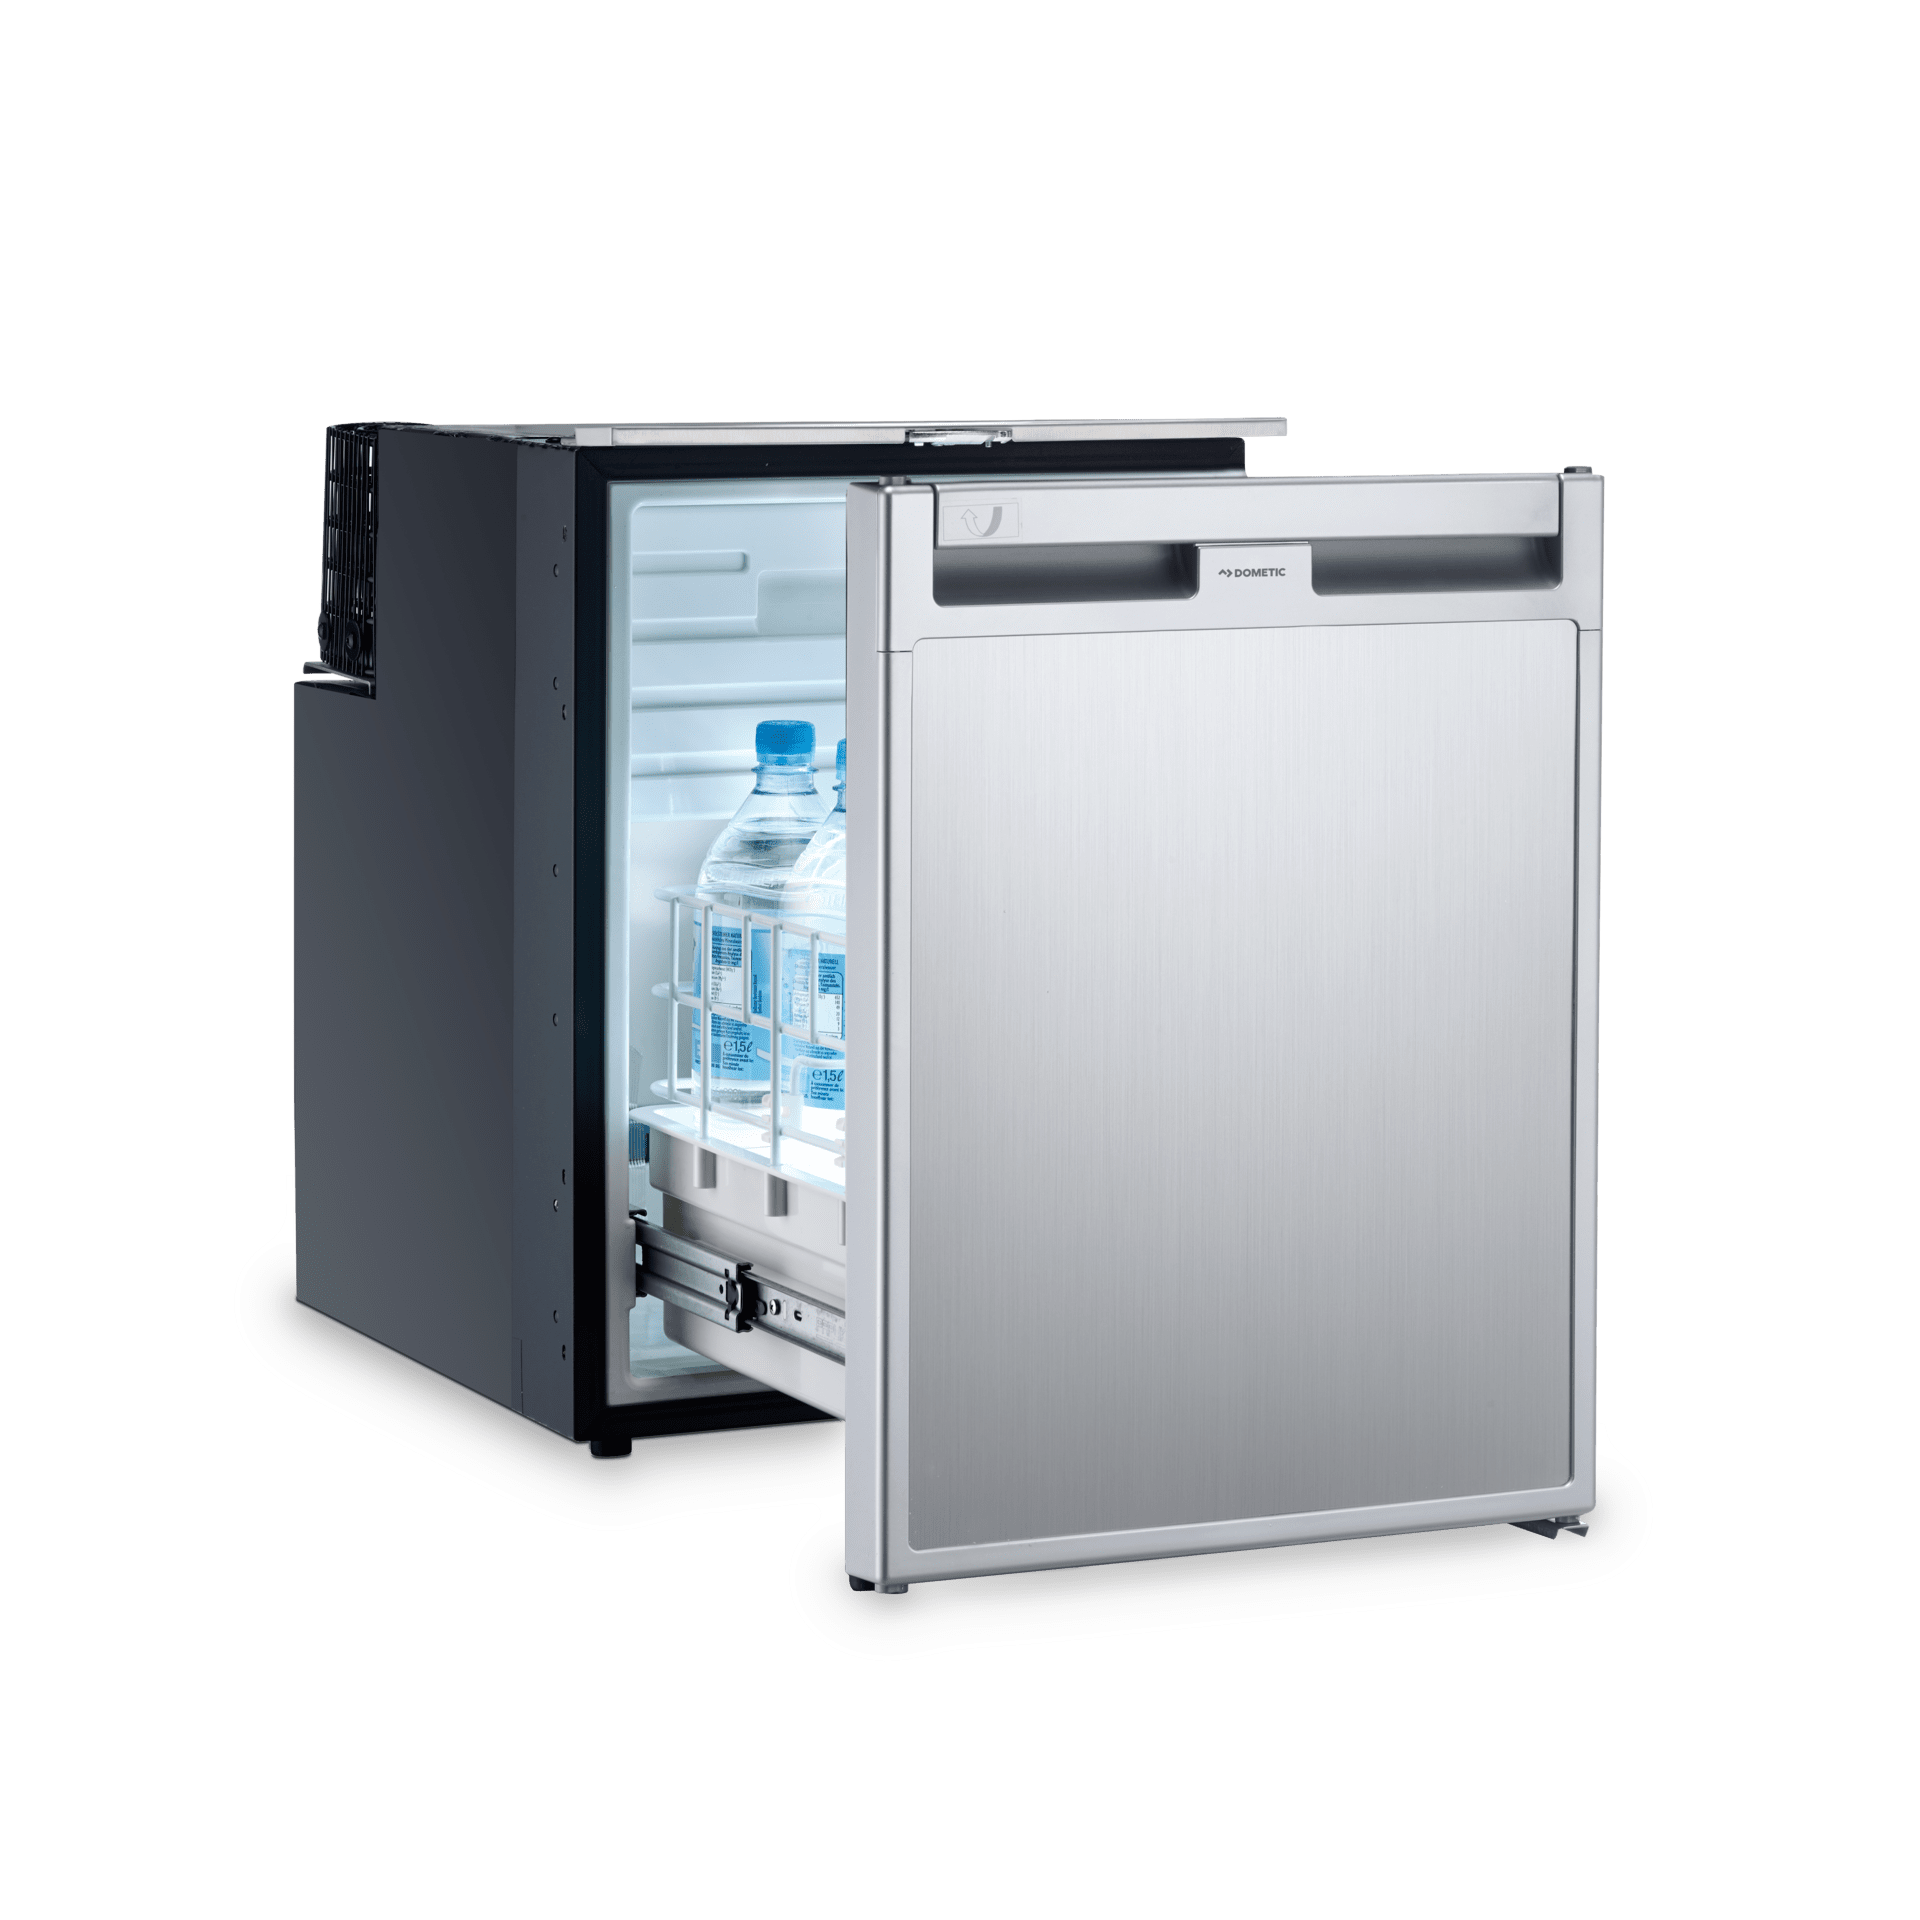 Dometic Kühlbox-Netzadapter MPS-35 von 110/230V auf 12/24V, 3A, Dometic  Kühlbox, Heizung, Kühlschränke, Kühlboxen, Klimaanlagen, Camping-Shop